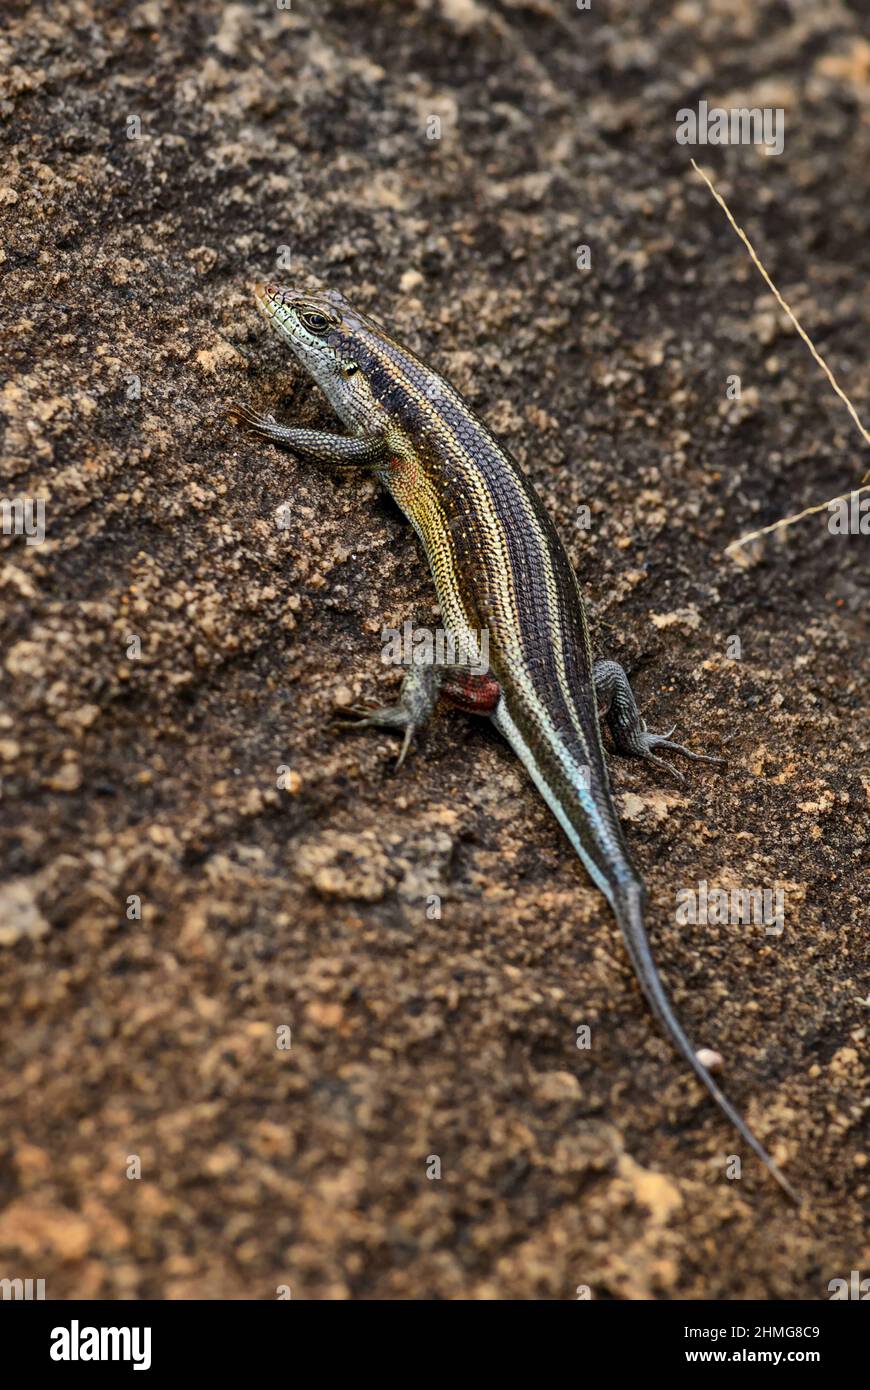 Rainbow Skink - Trachylepis quinquetaeniata, beautiful shy lizard from African bushes and woodlands, Tsavo East, Kenya. Stock Photo